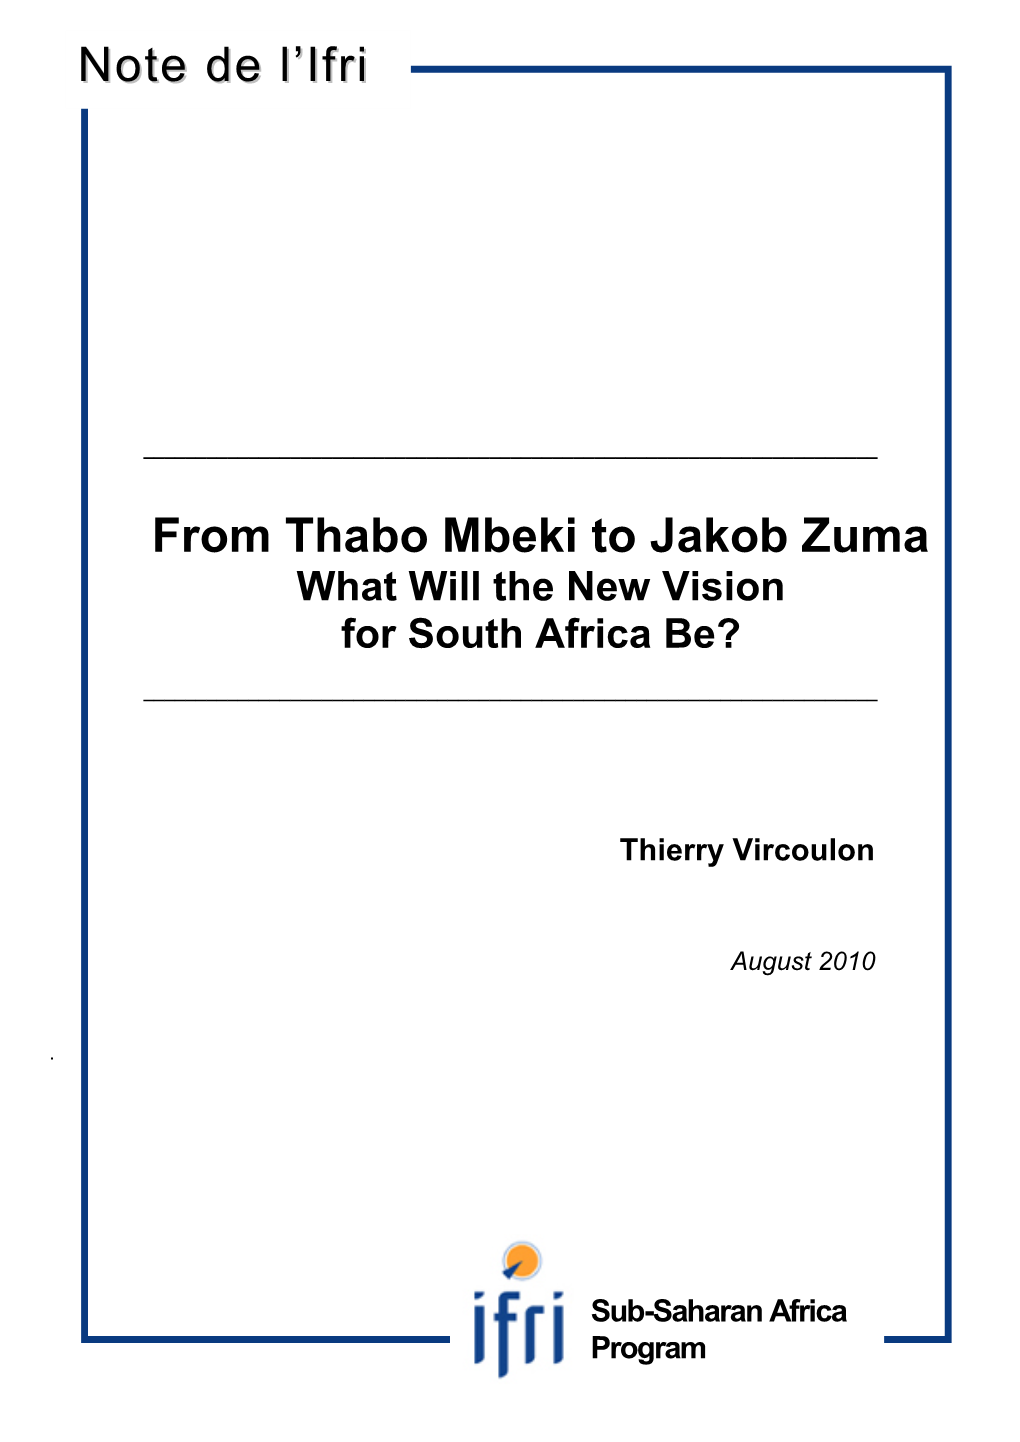 From Thabo Mbeki to Jakob Zuma Note De L'ifri